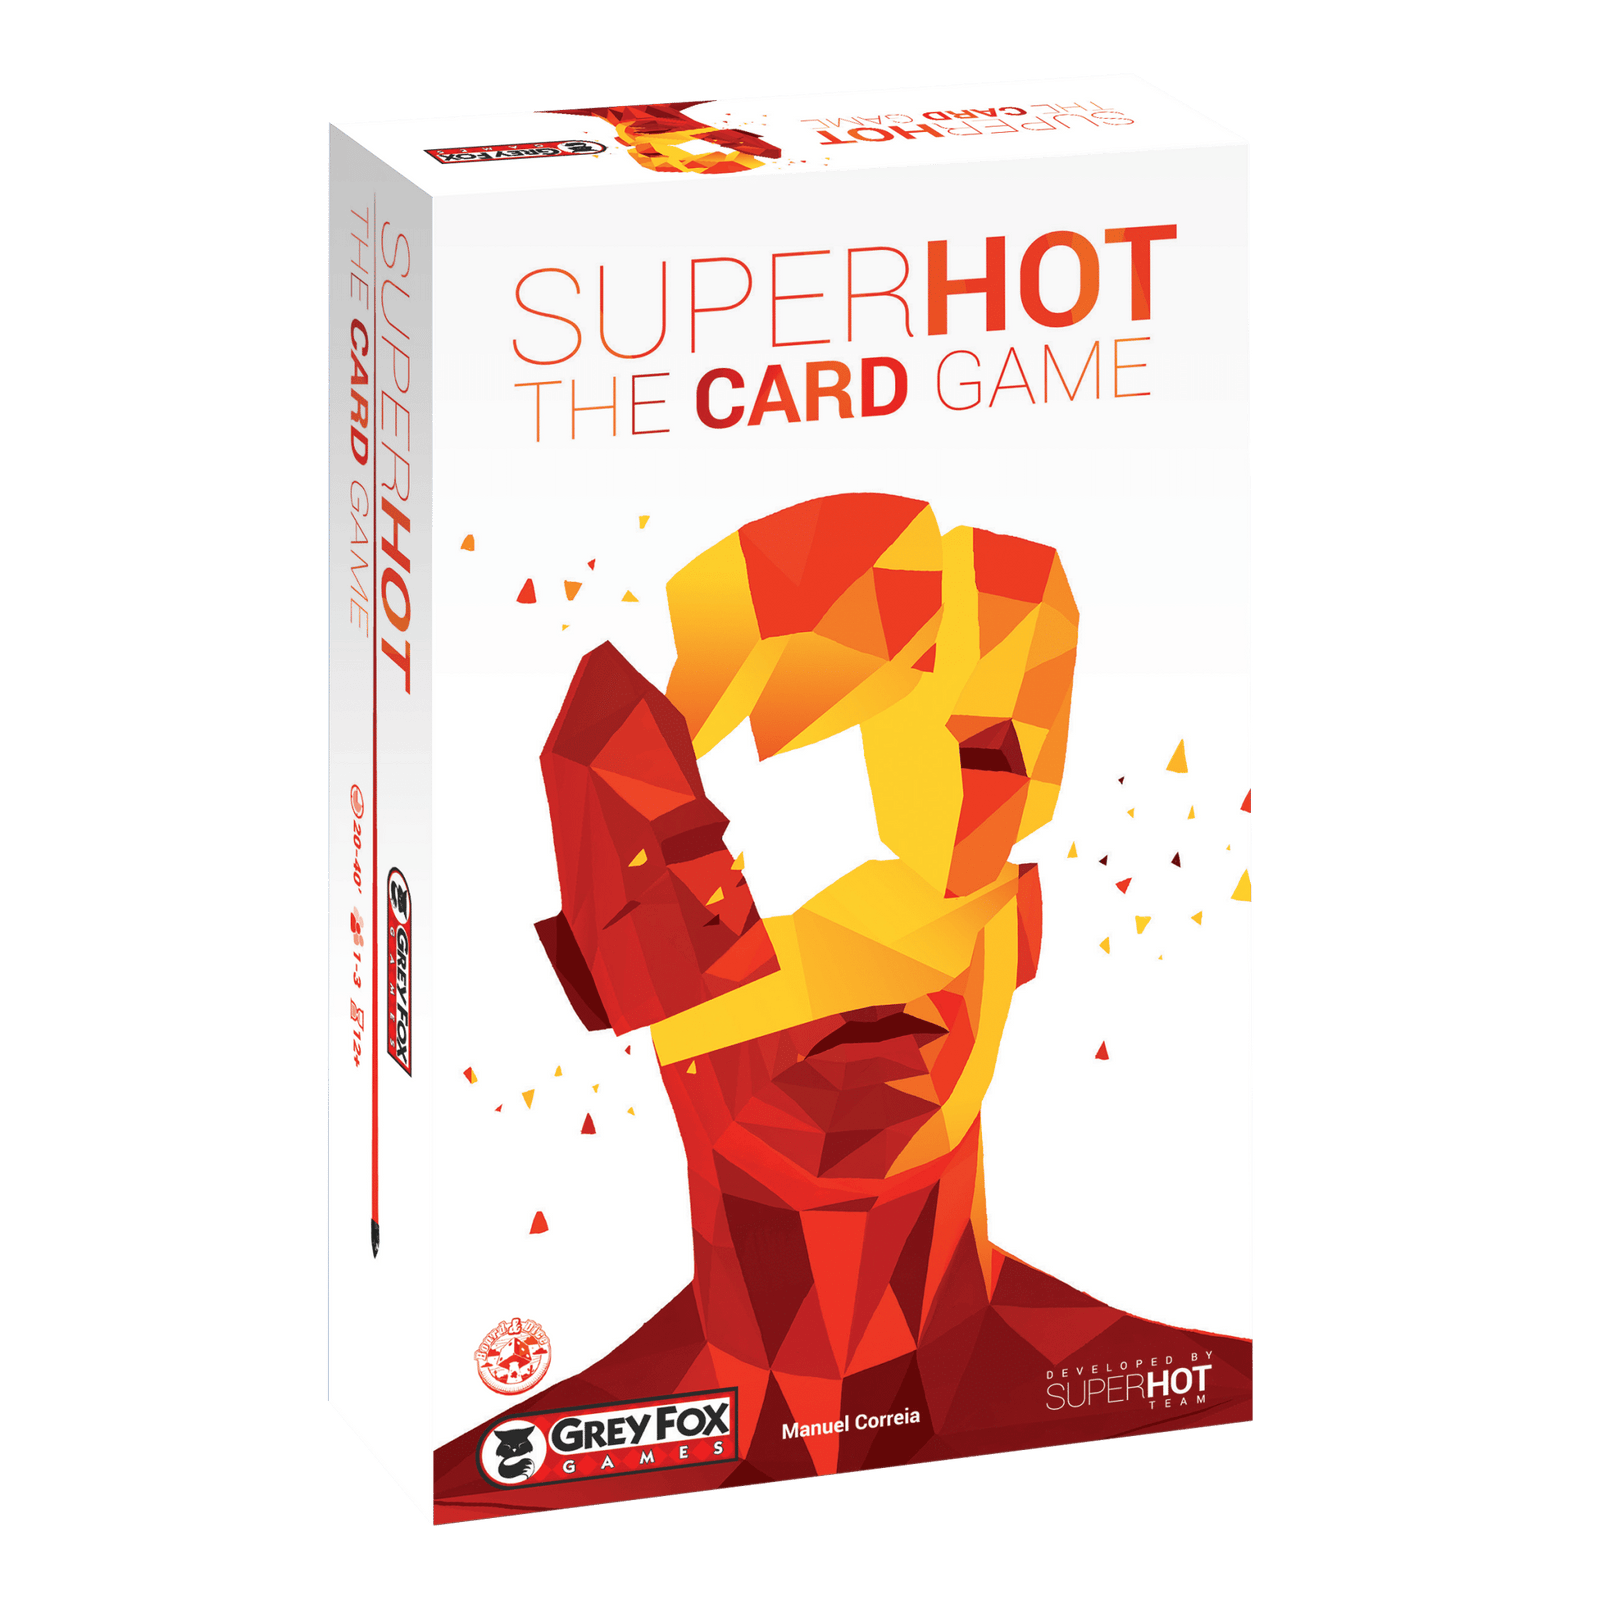 Superhot: The Card Game